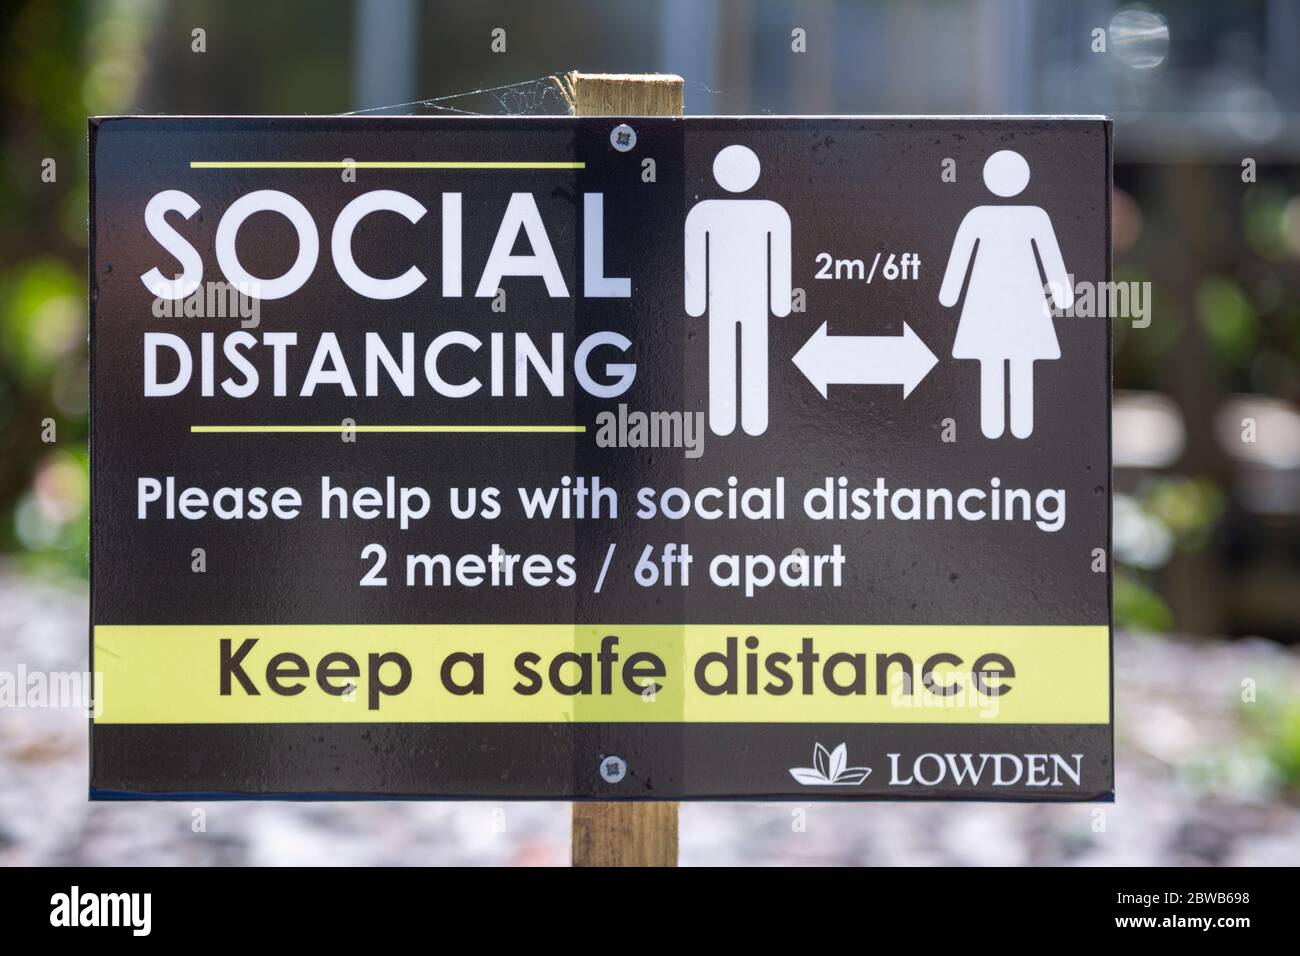 Social Distancing 2 metres apart information notice sign in Lowden garden centre shop, Wiltshire, England, UK, May 2020 Stock Photo